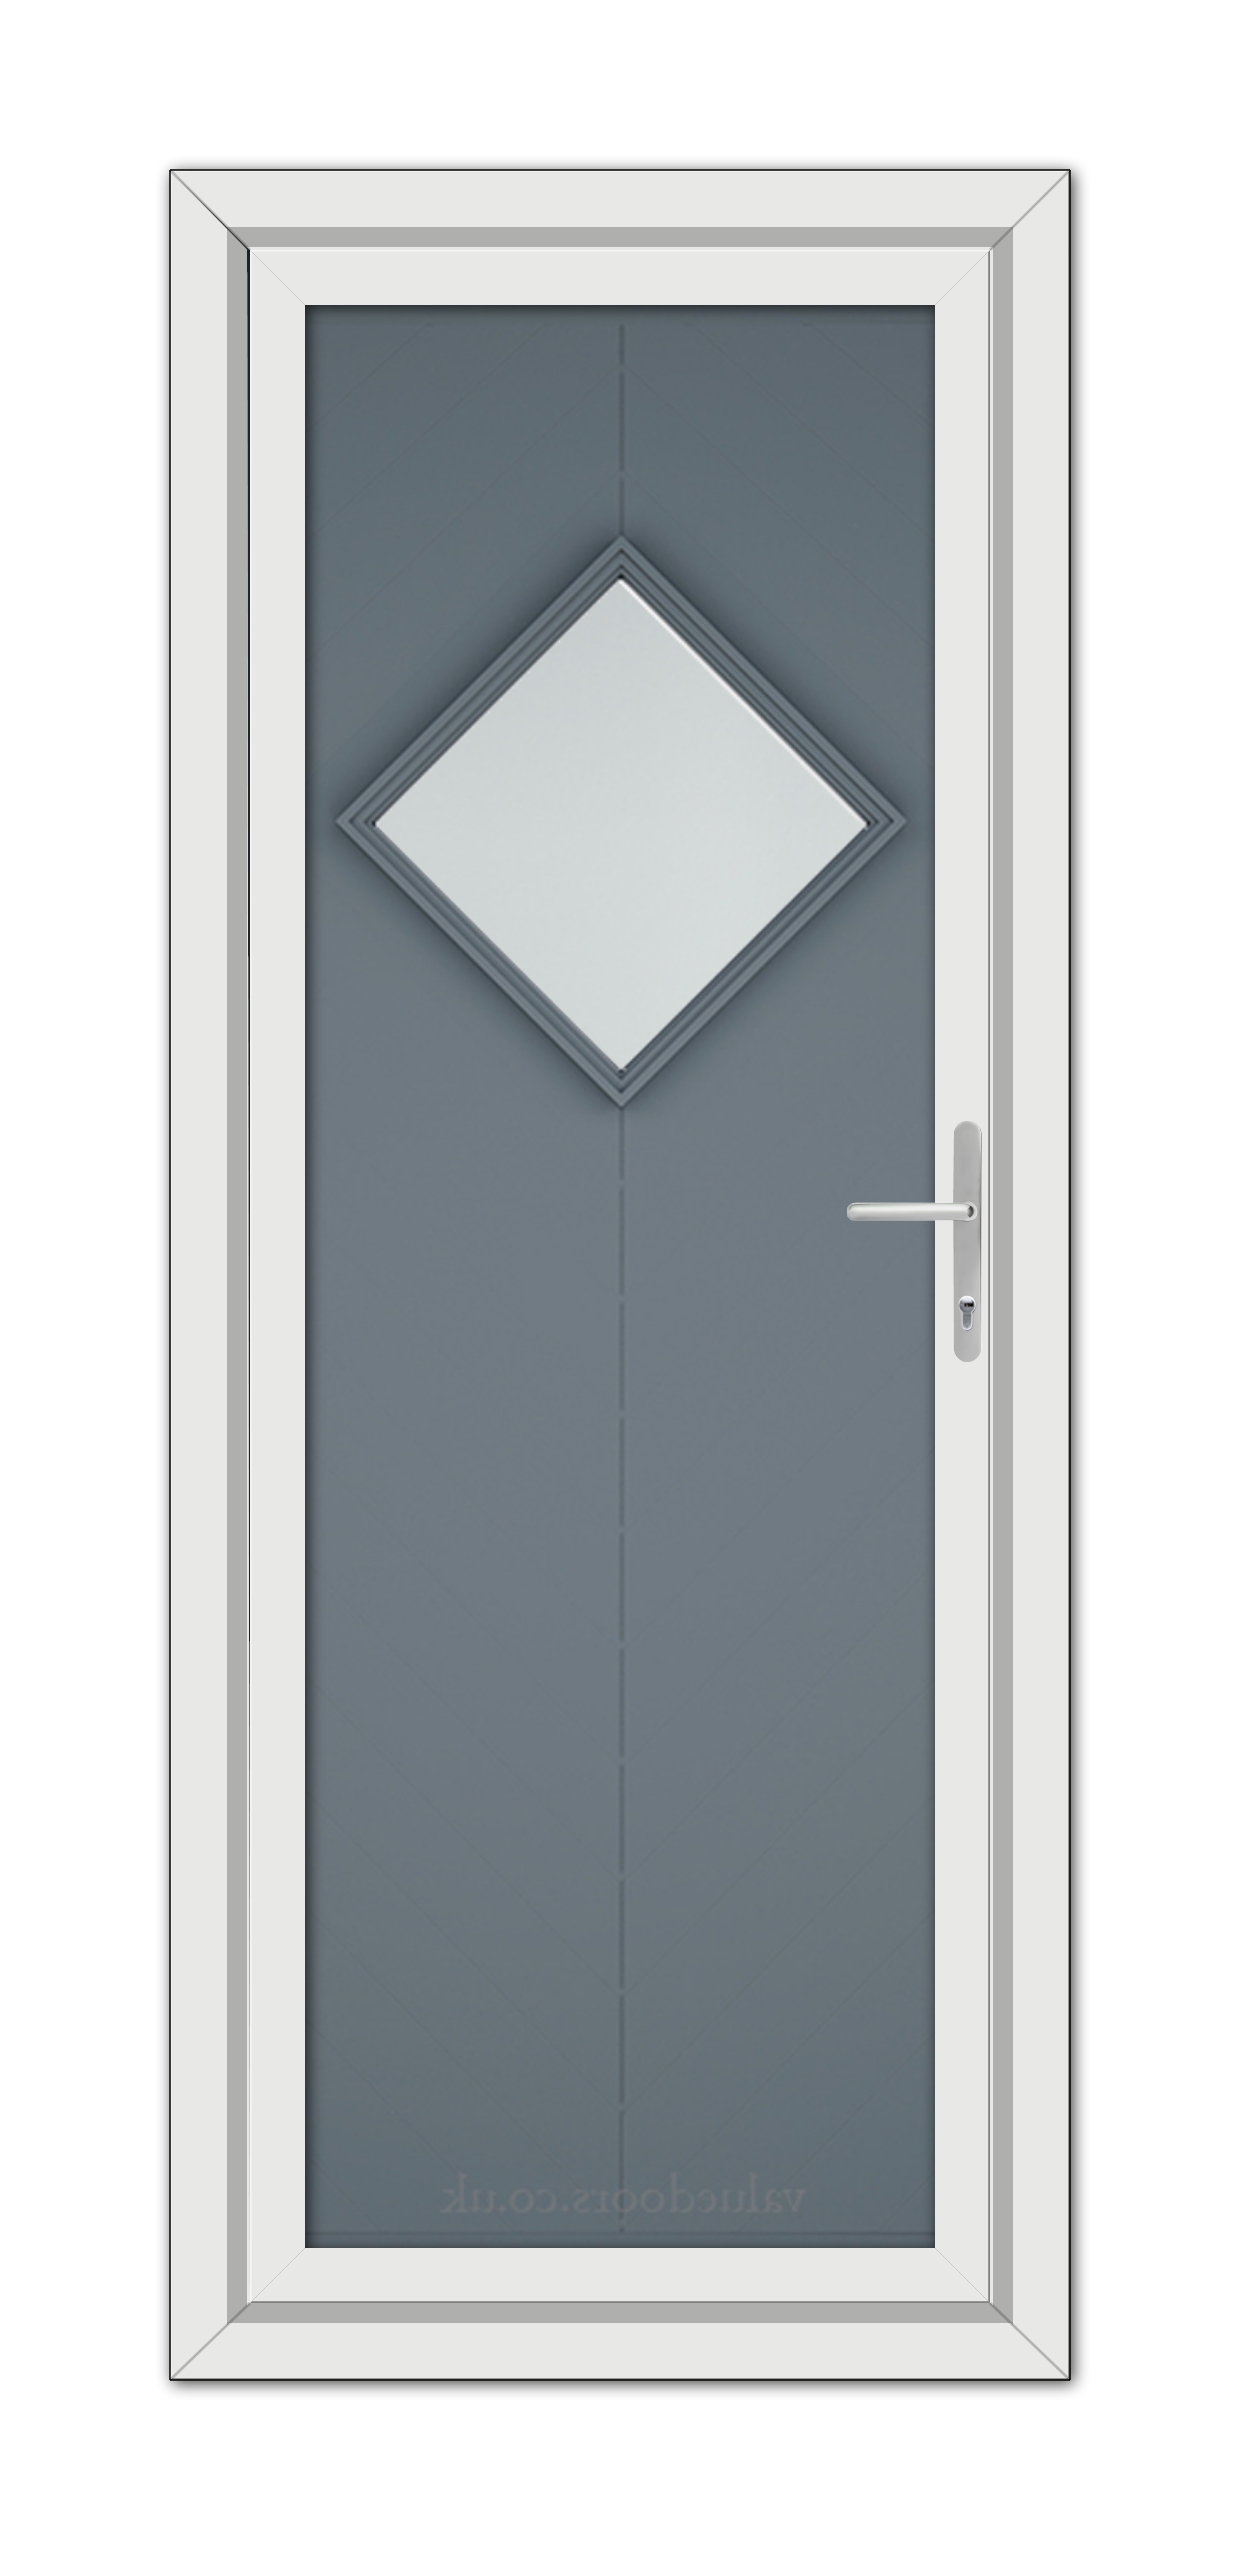 A Slate Grey Hamburg uPVC Door with a square window.